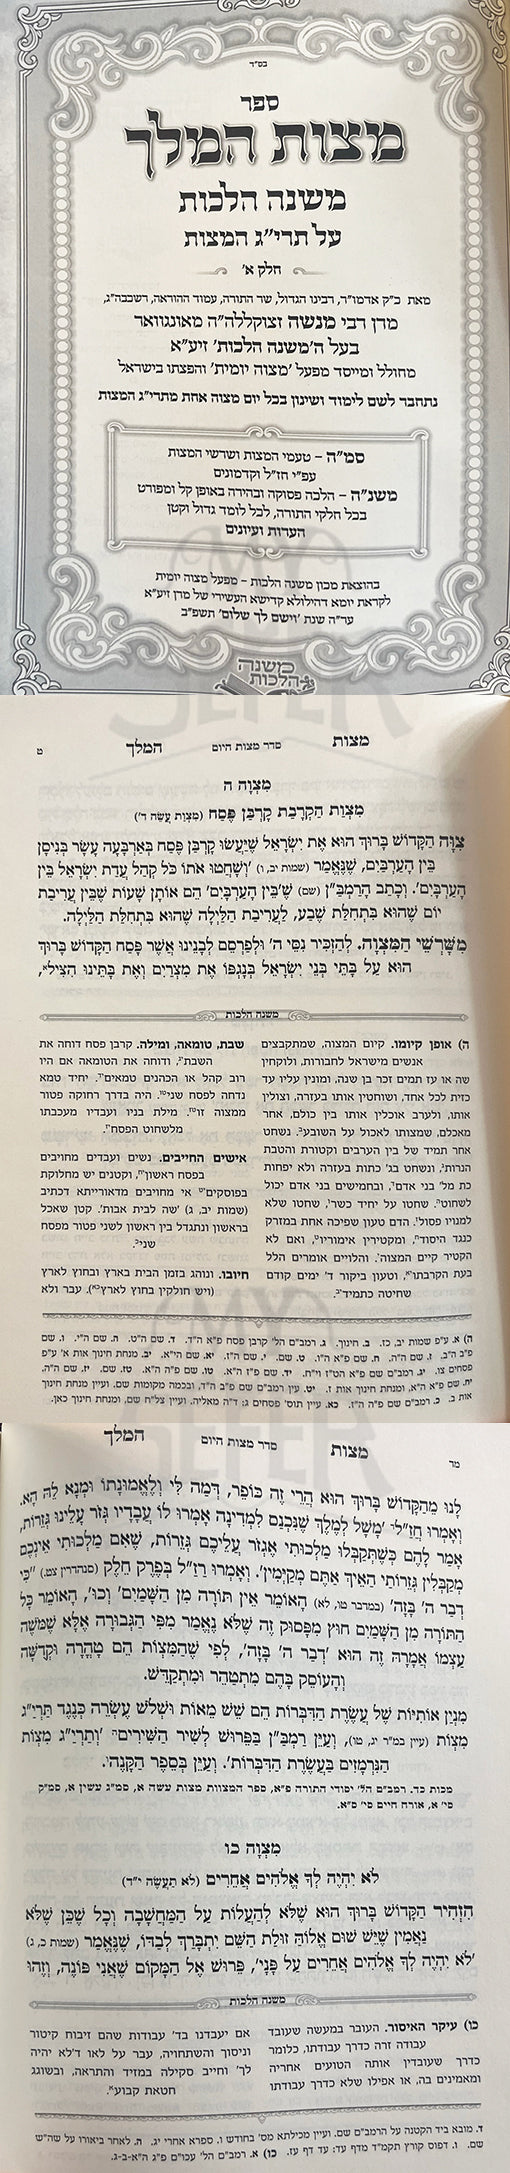 Mitzvat HaMelech - Mishnah Halachot Al Sefer Mitzvot - 2 Volume Set